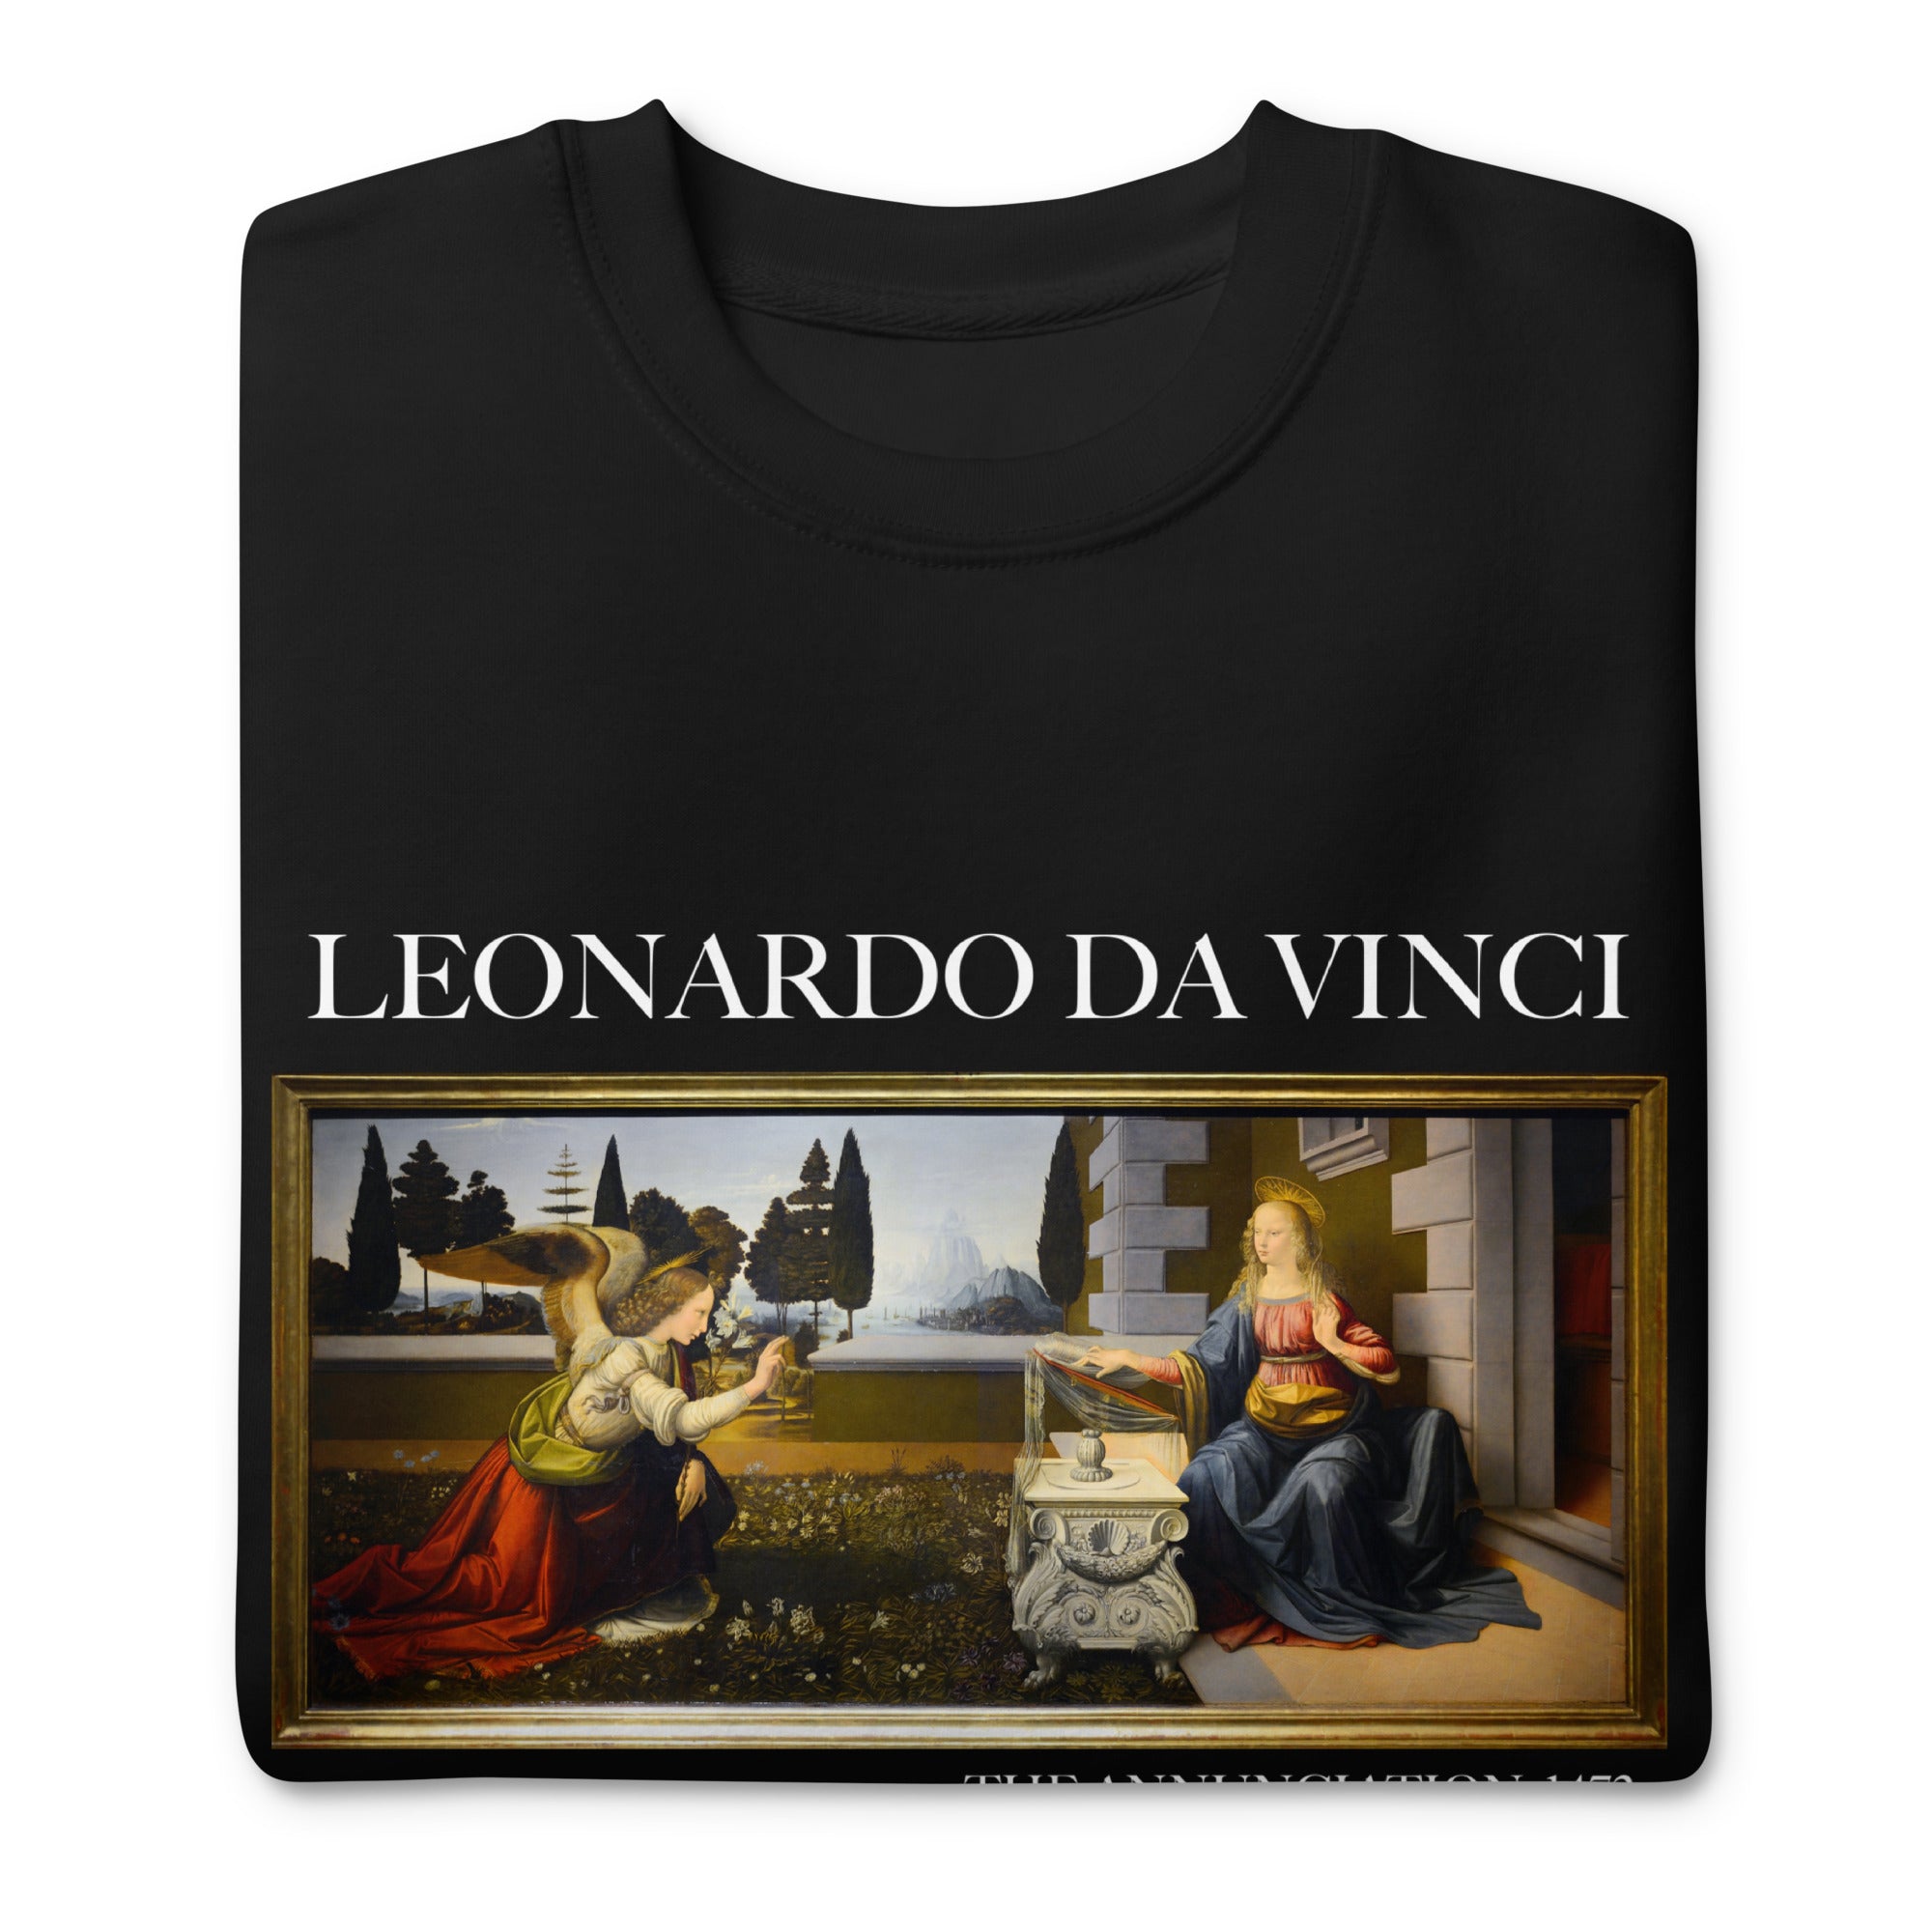 Leonardo da Vinci 'The Annunciation' Famous Painting Sweatshirt | Unisex Premium Sweatshirt